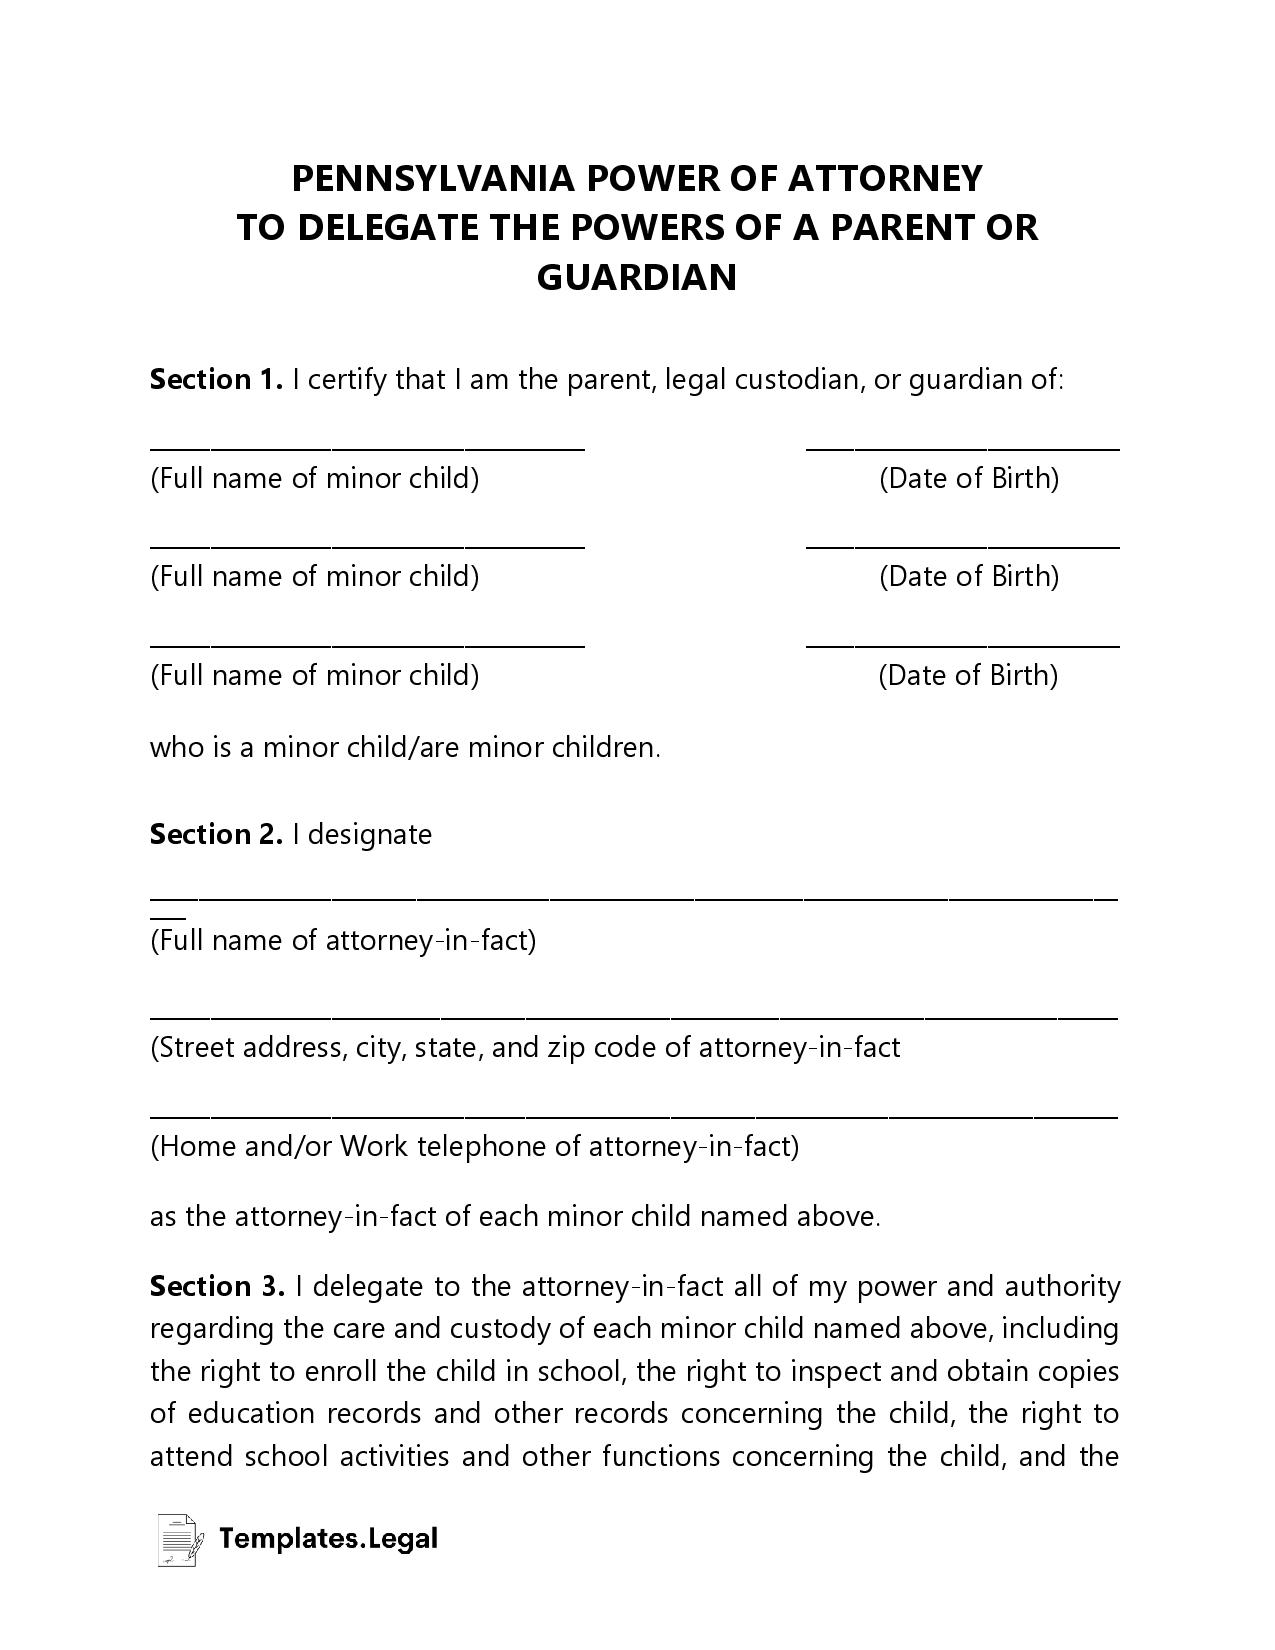 Pennsylvania Minor (Child) Power of Attorney - Templates.Legal